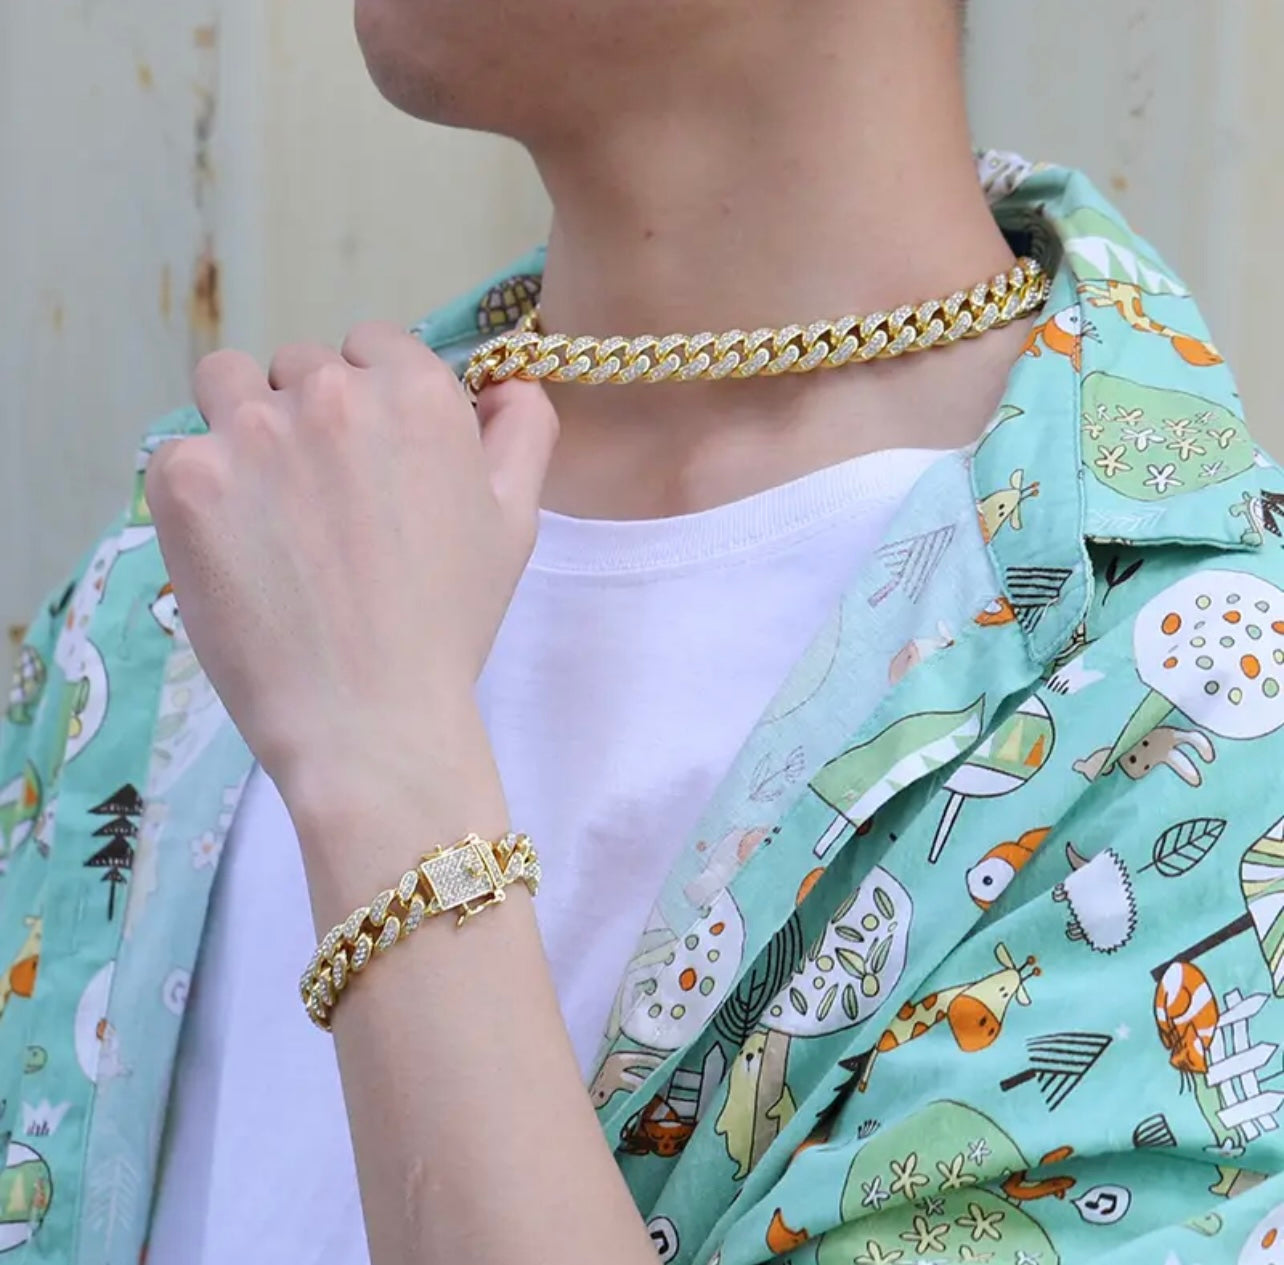 13mm Golden iced out miami Cuban link neck chain bracelet for men online in pakistan